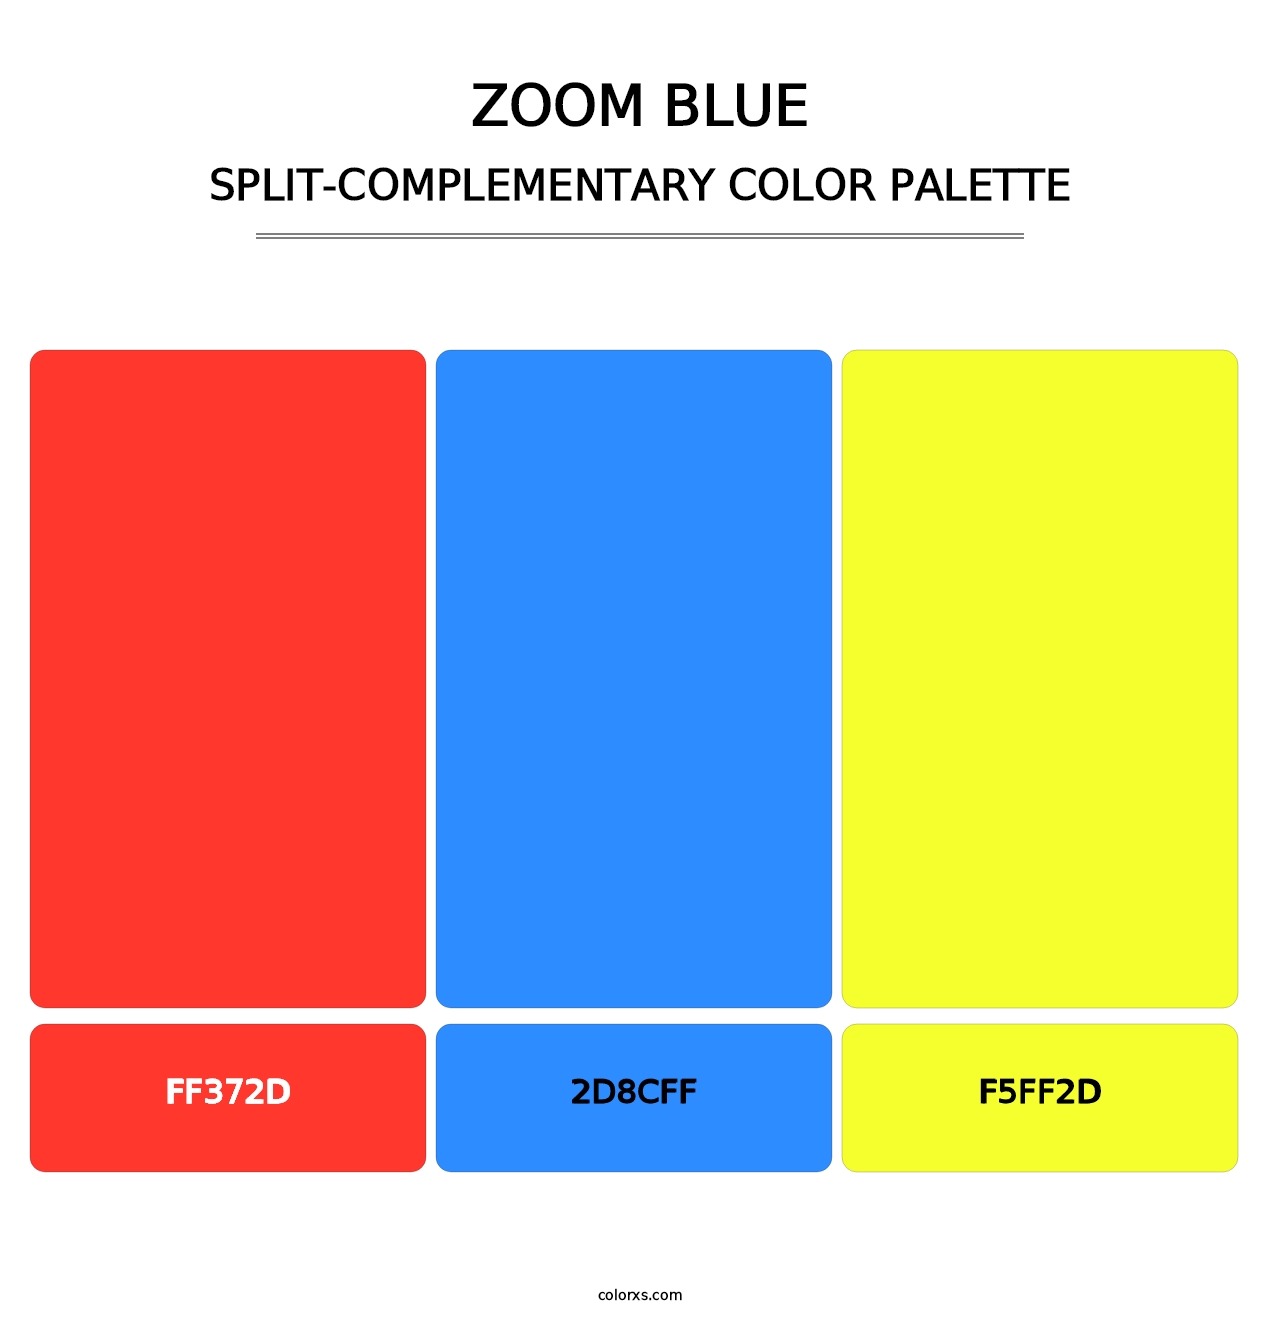 Zoom Blue - Split-Complementary Color Palette